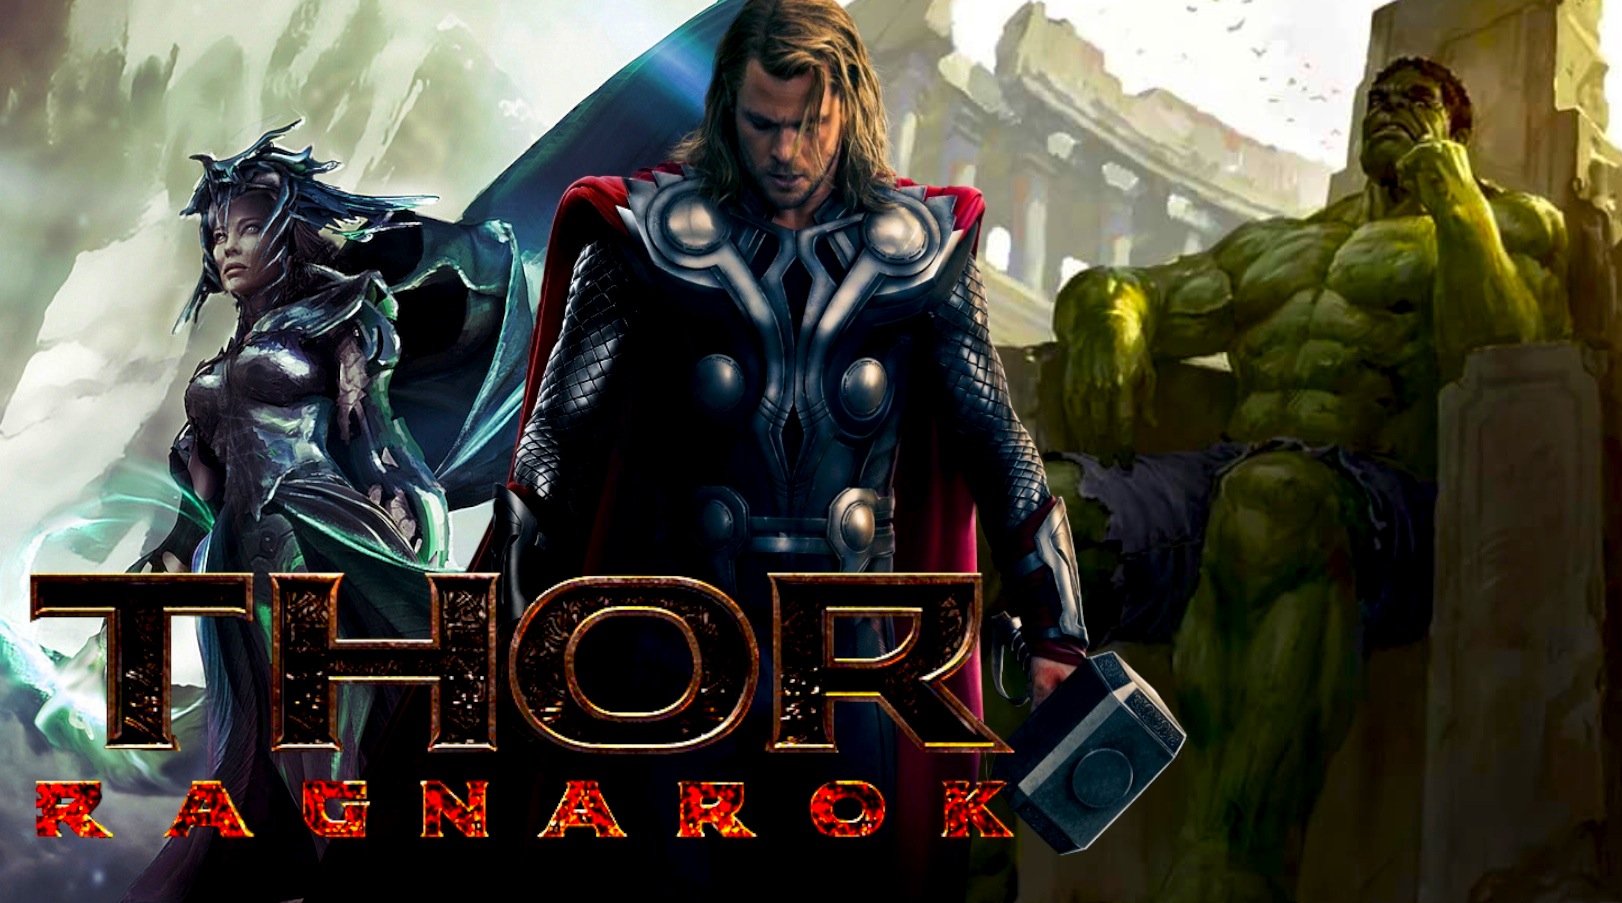 Thor: Ragnarok Backgrounds on Wallpapers Vista